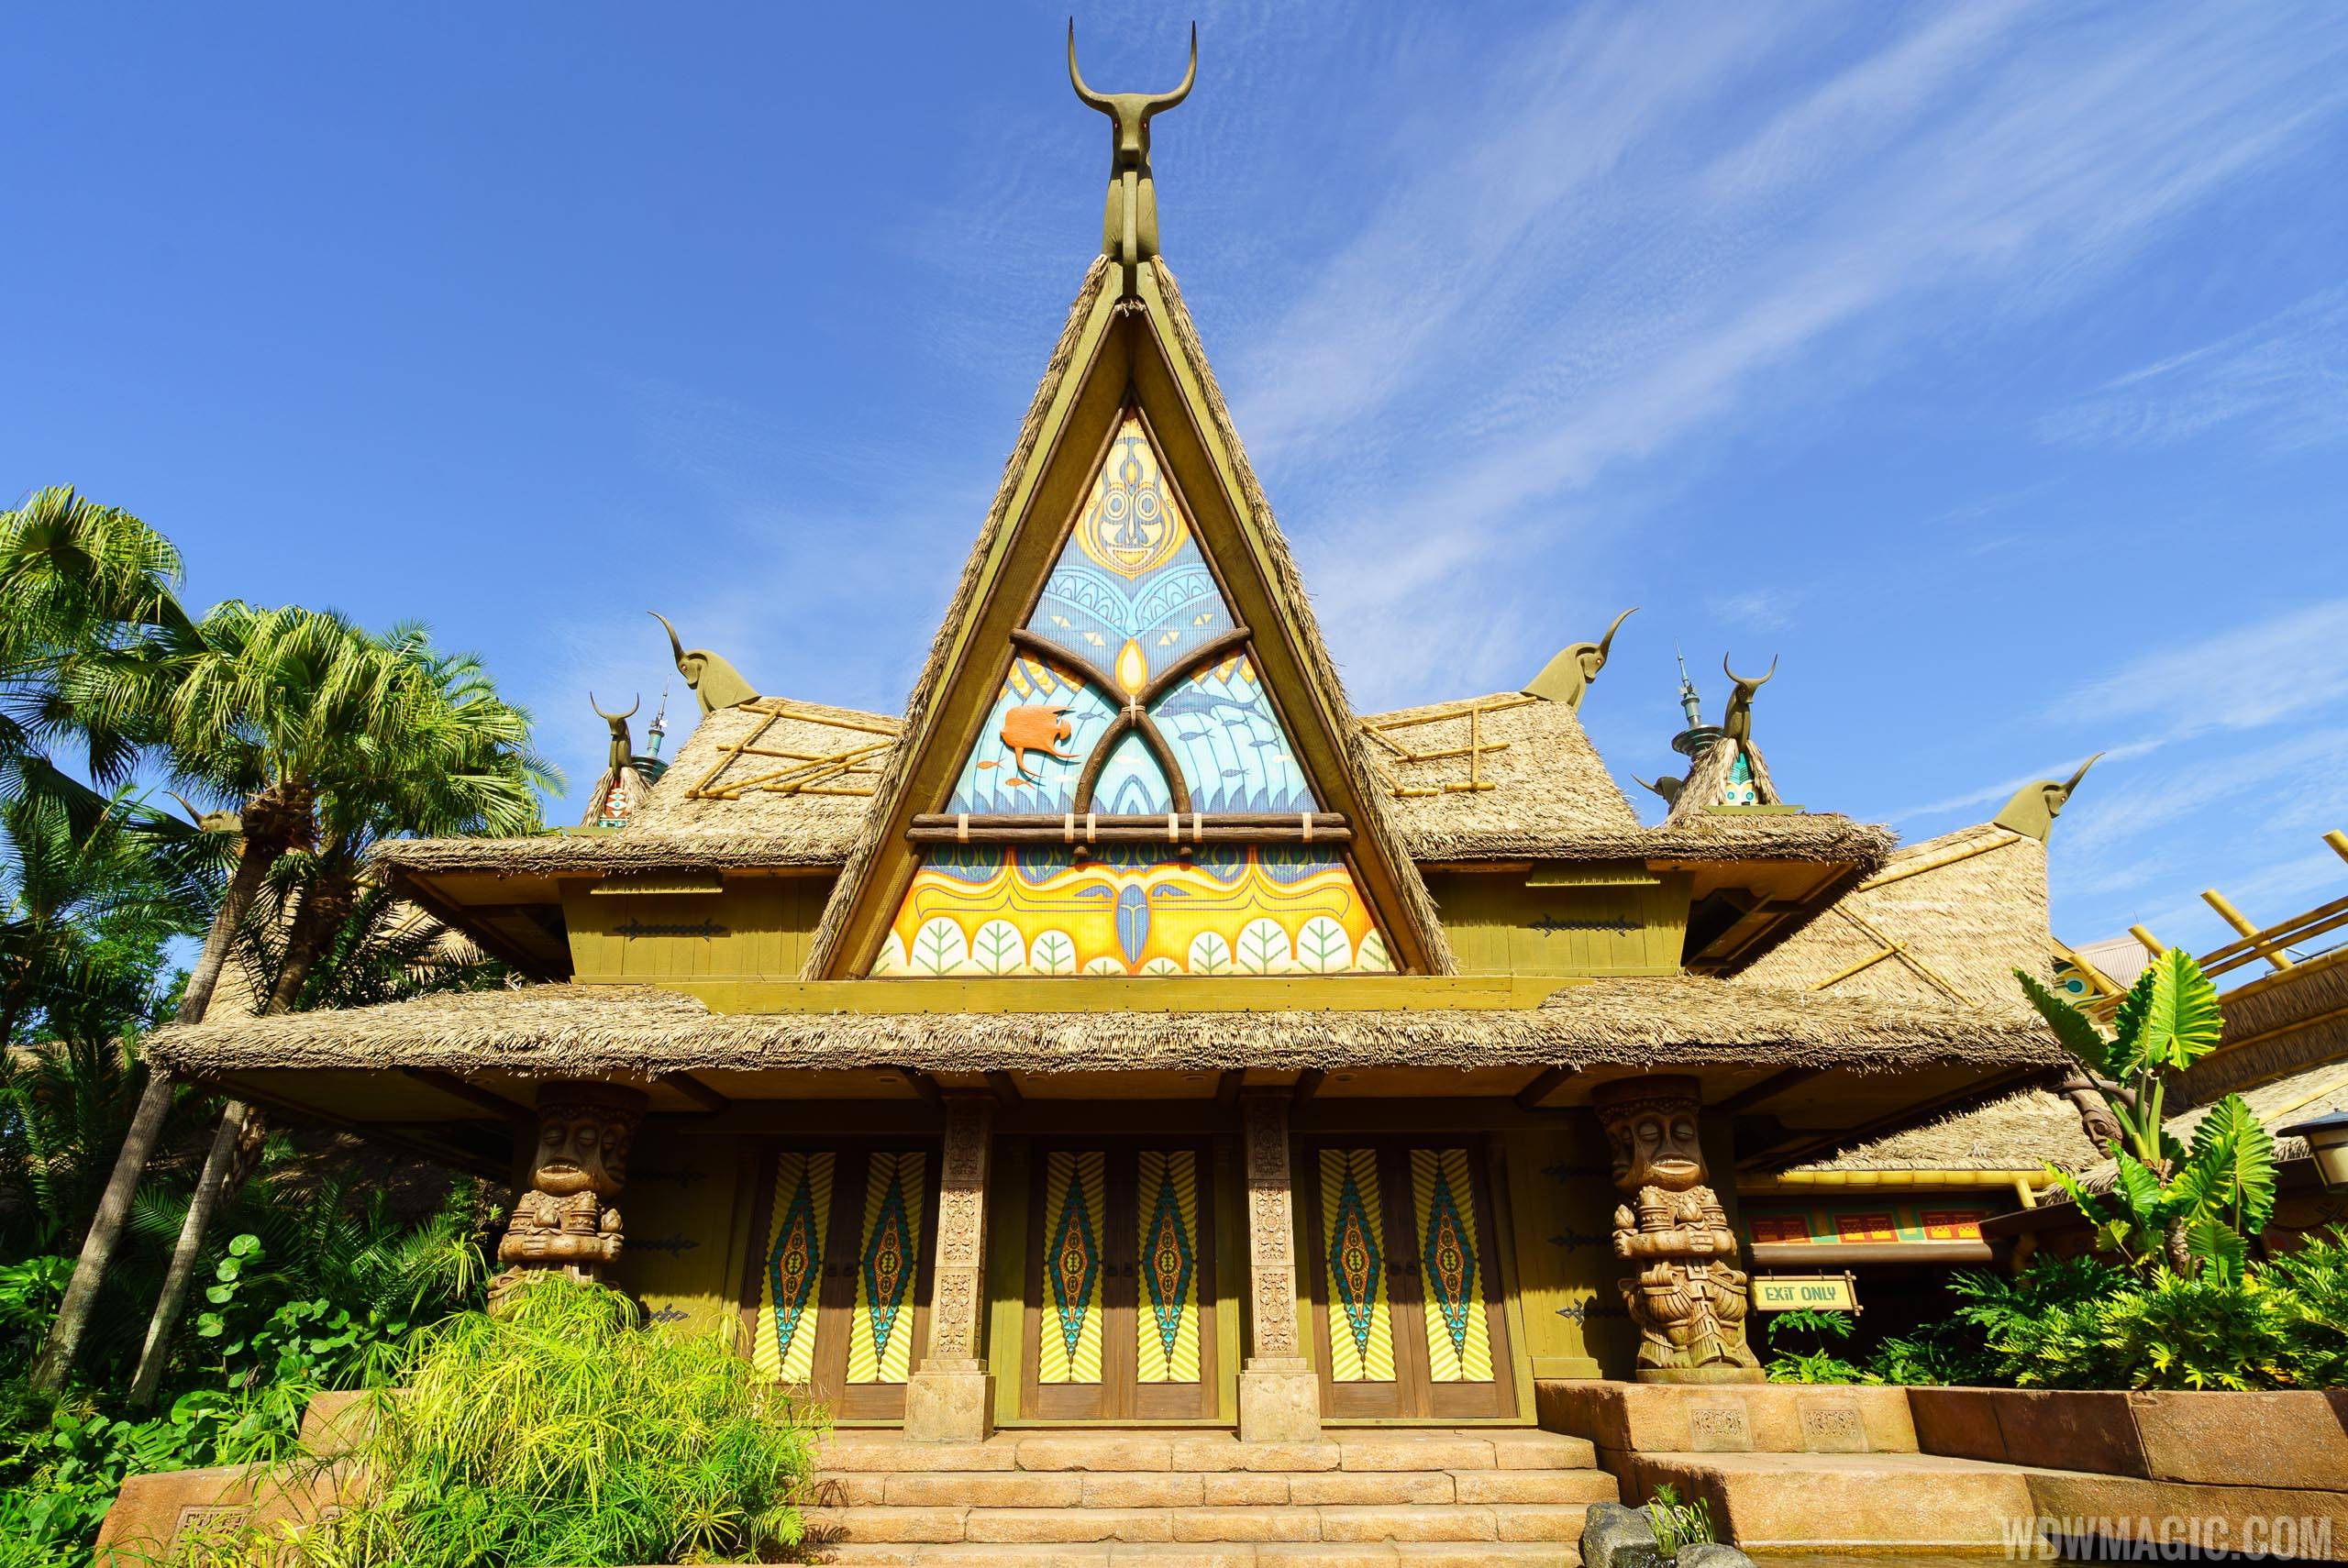 Walt Disney's Enchanted Tiki Room show building